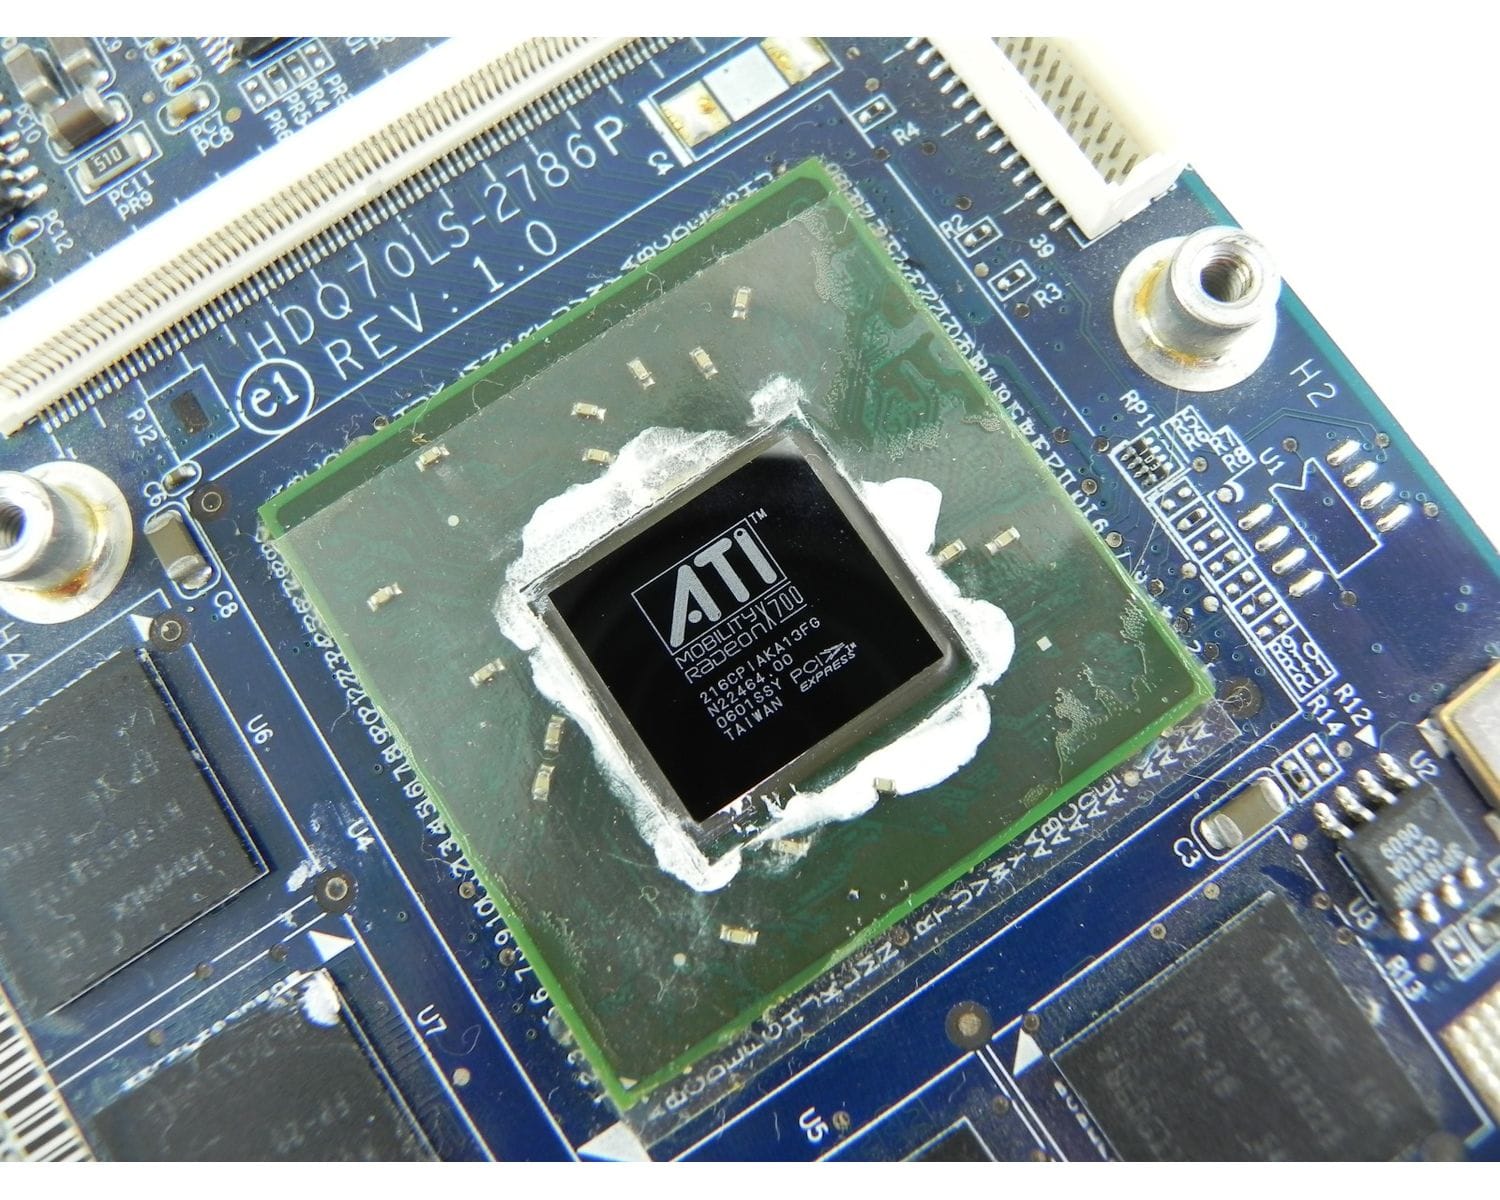 AMD Mobility Radeon x700. ATI Mobility Radeon x200.